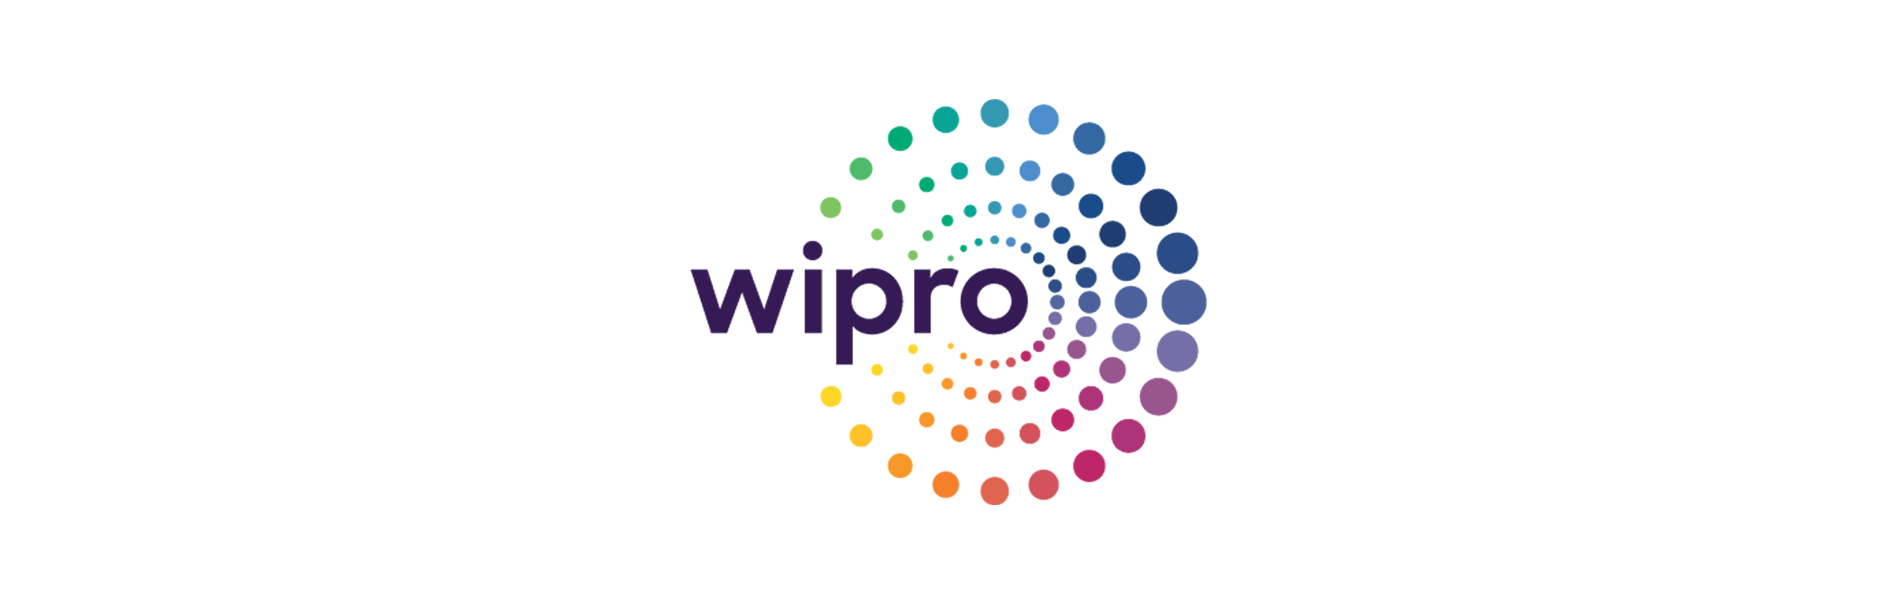 Future of Mining Exploration | Big Data In Mining - Wipro